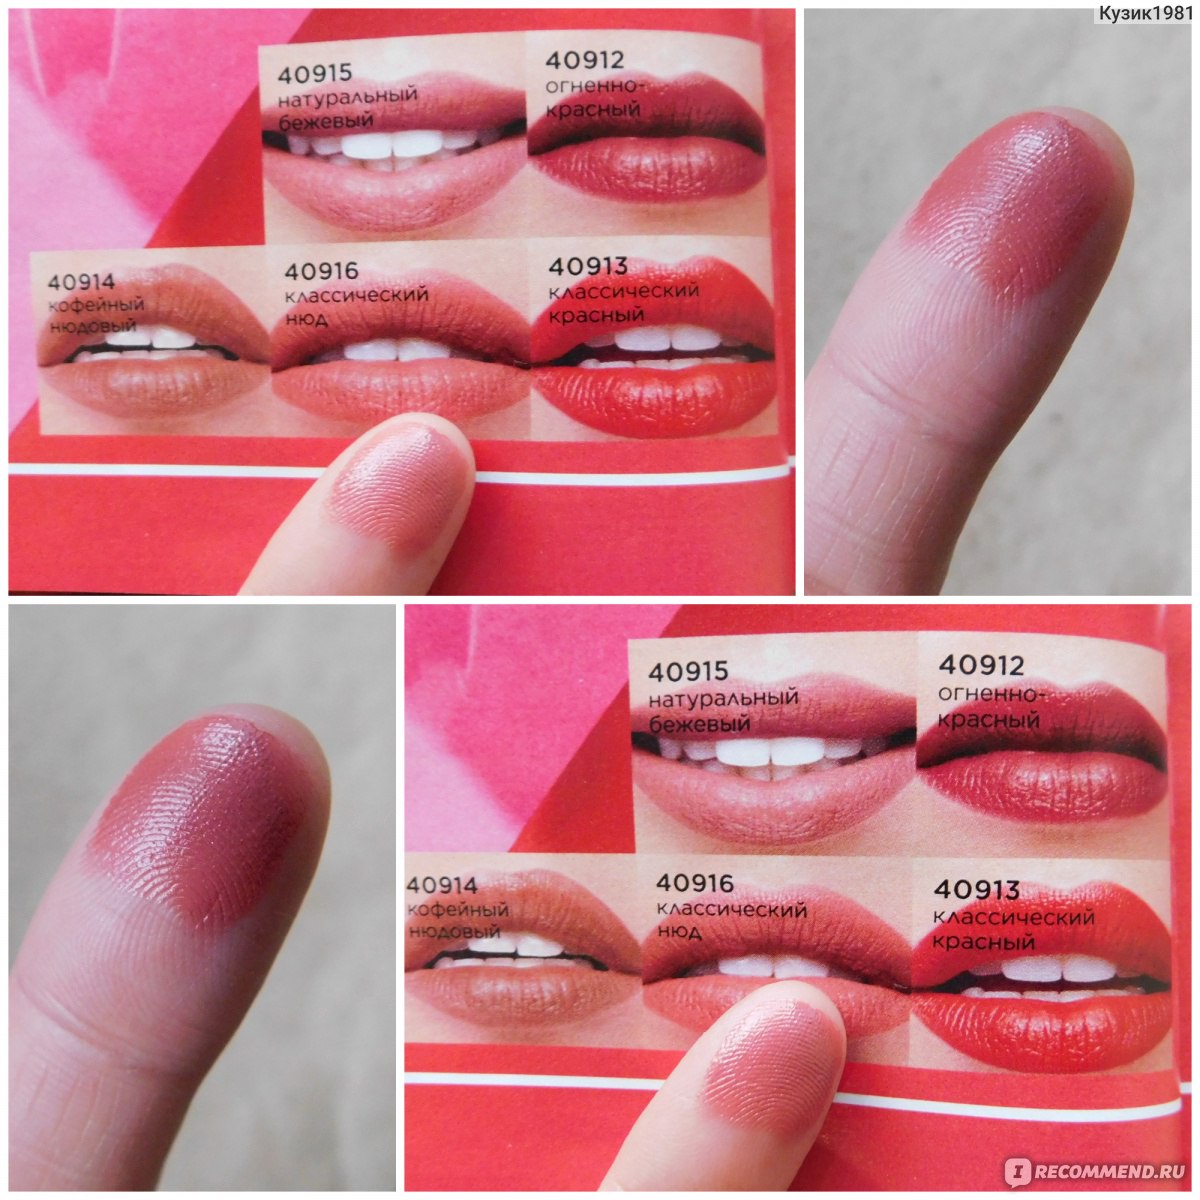 Губная помада Faberlic Glam Team Hydra Lips Limited Edition, тон «Классический нюд» (артикул 40916)